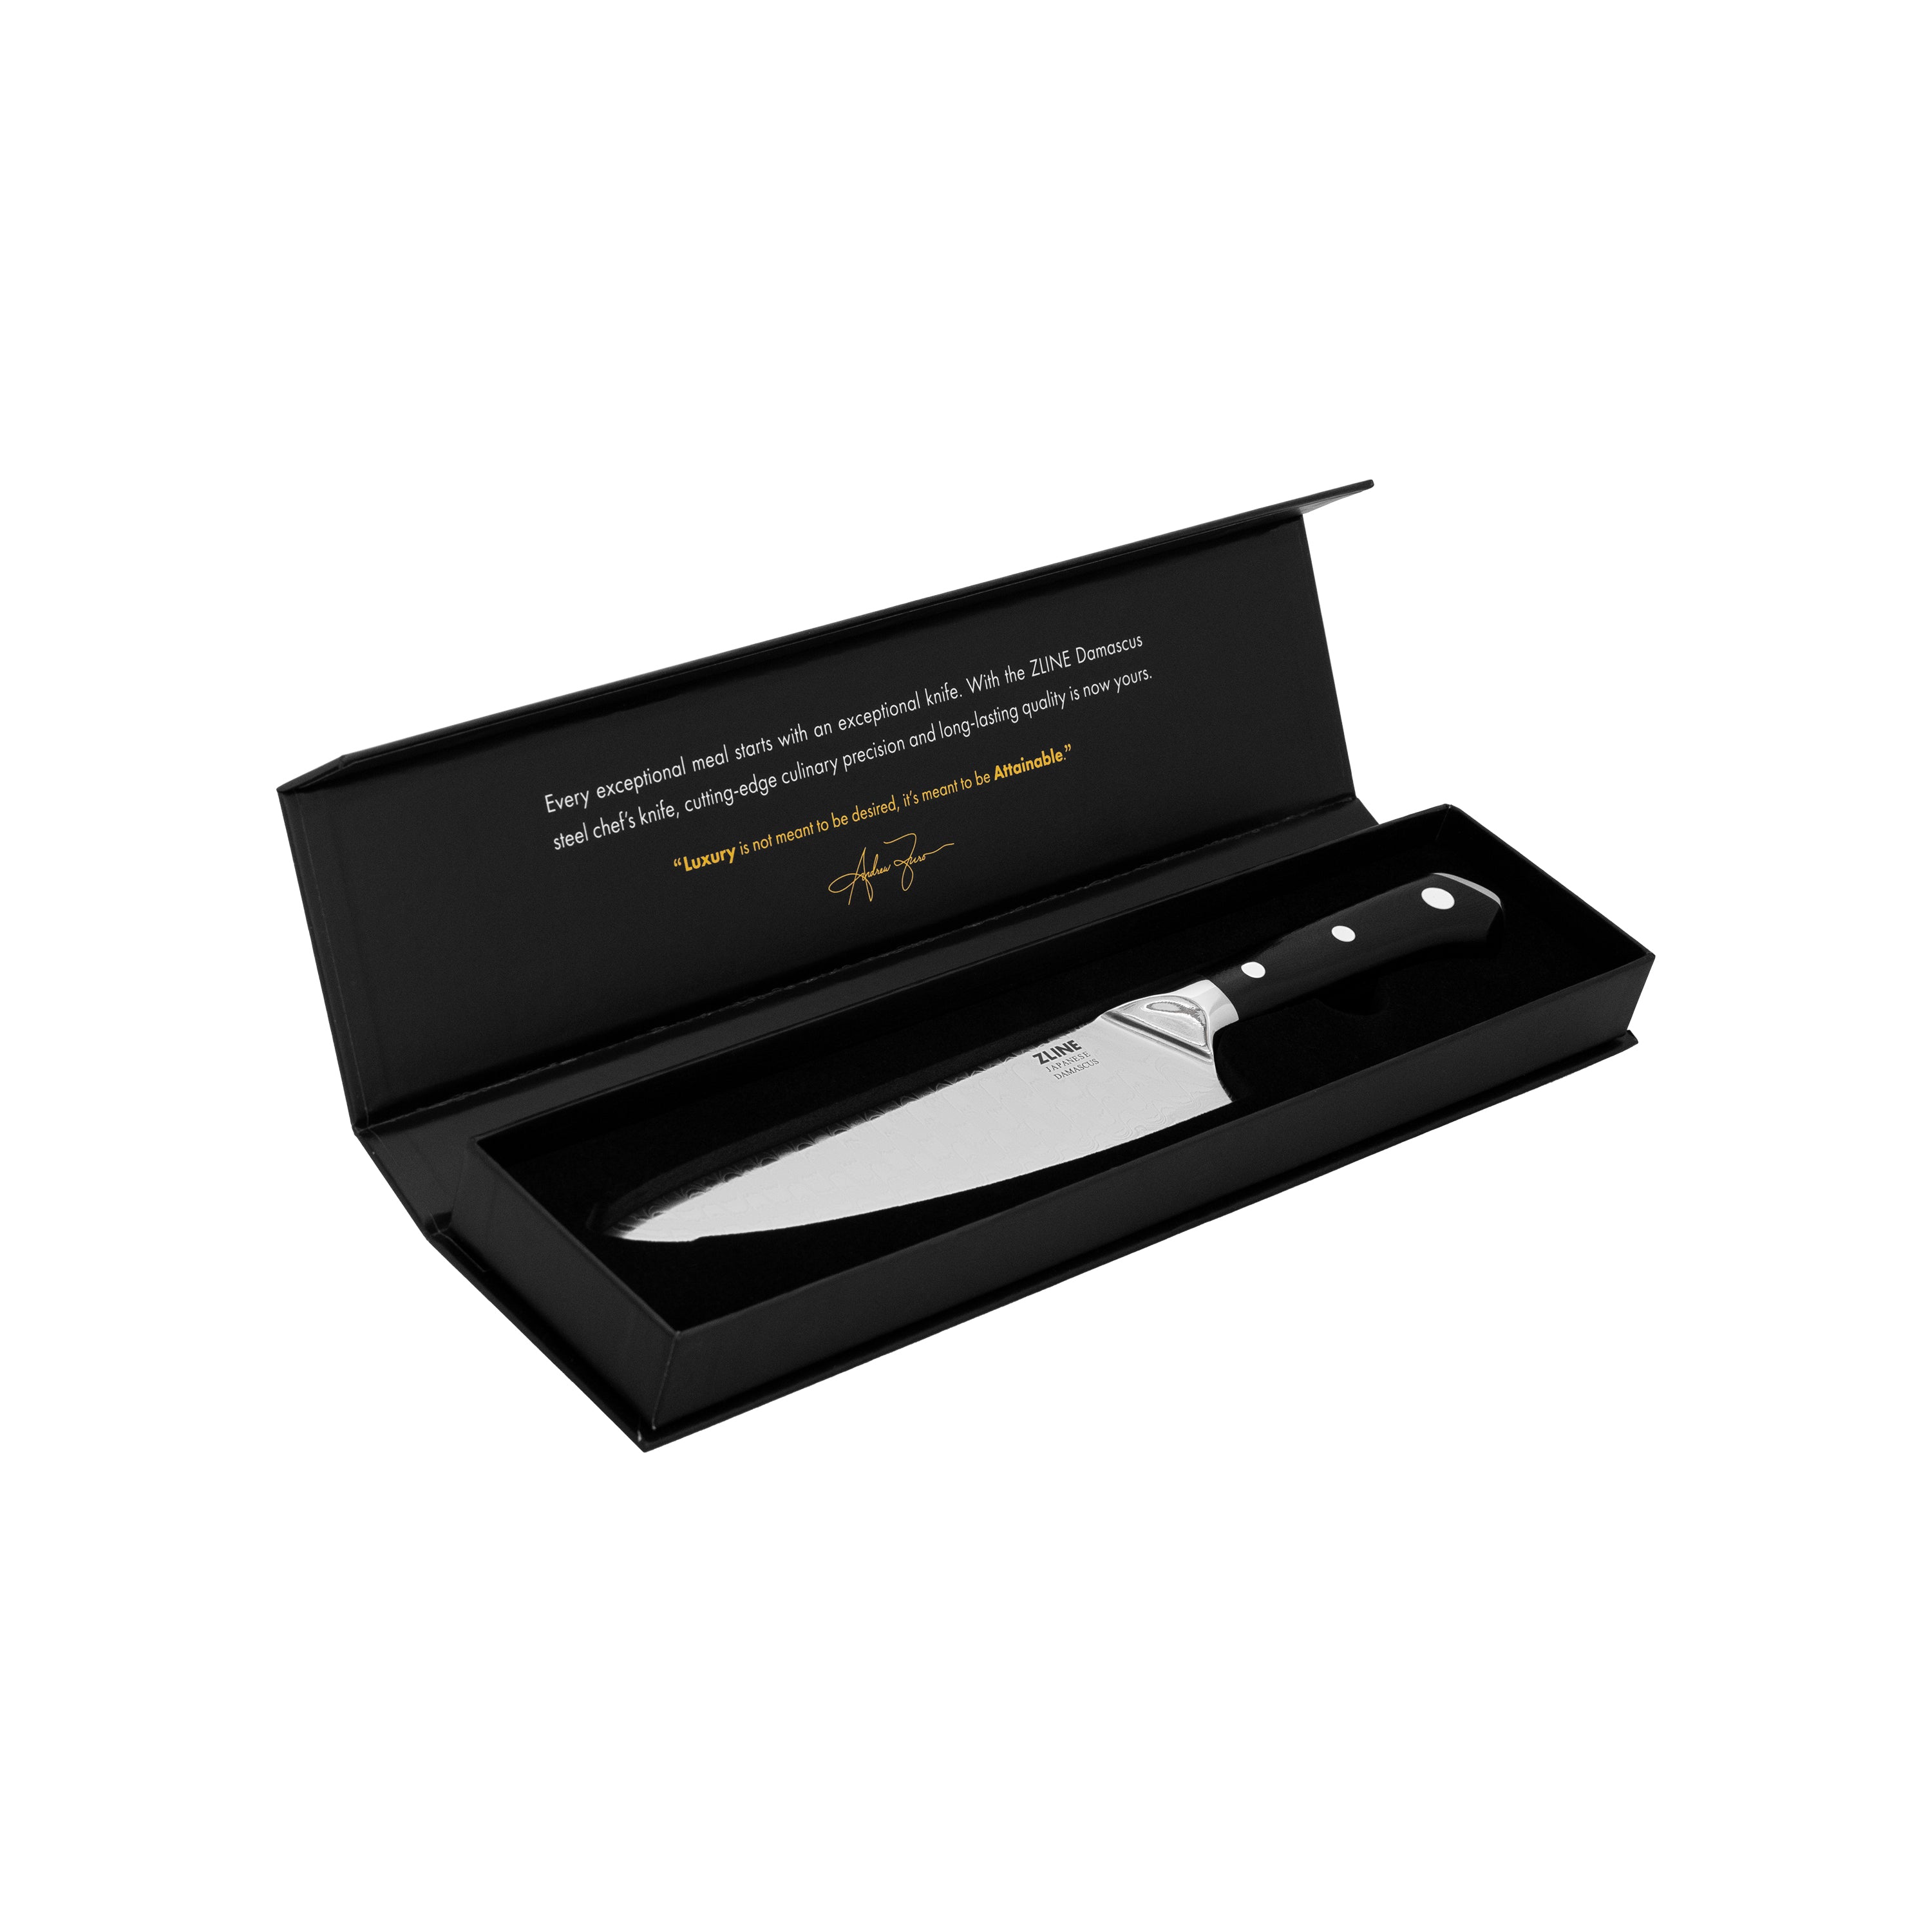 ZLINE 8” Professional Damascus Steel Chef’s Knife